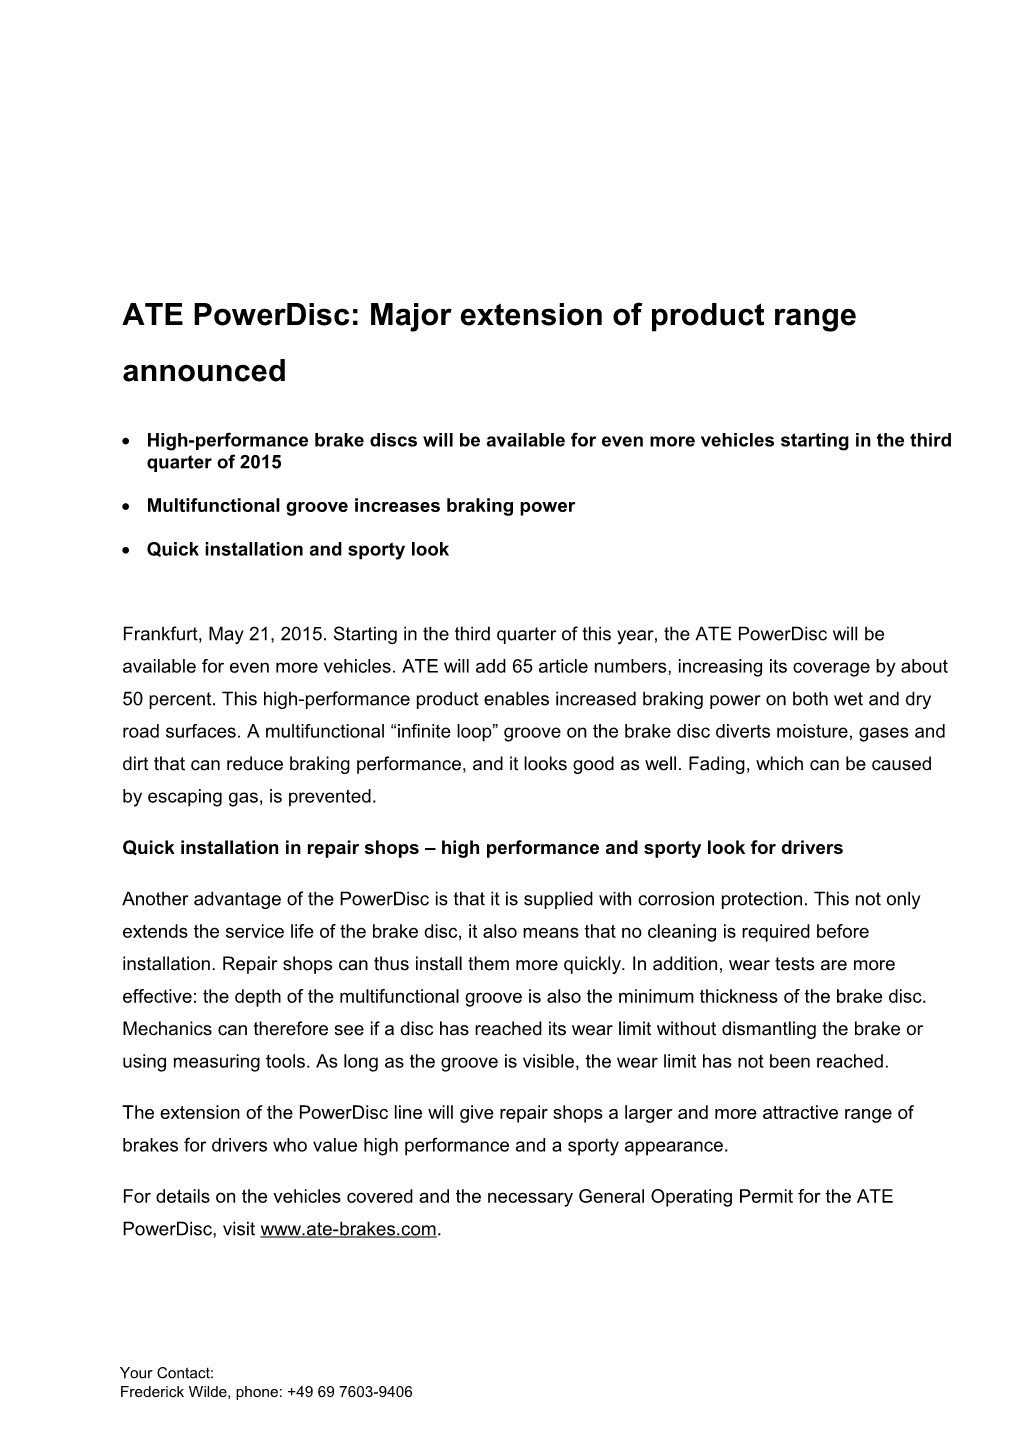 ATE Powerdisc: Major Extension of Product Range Announced